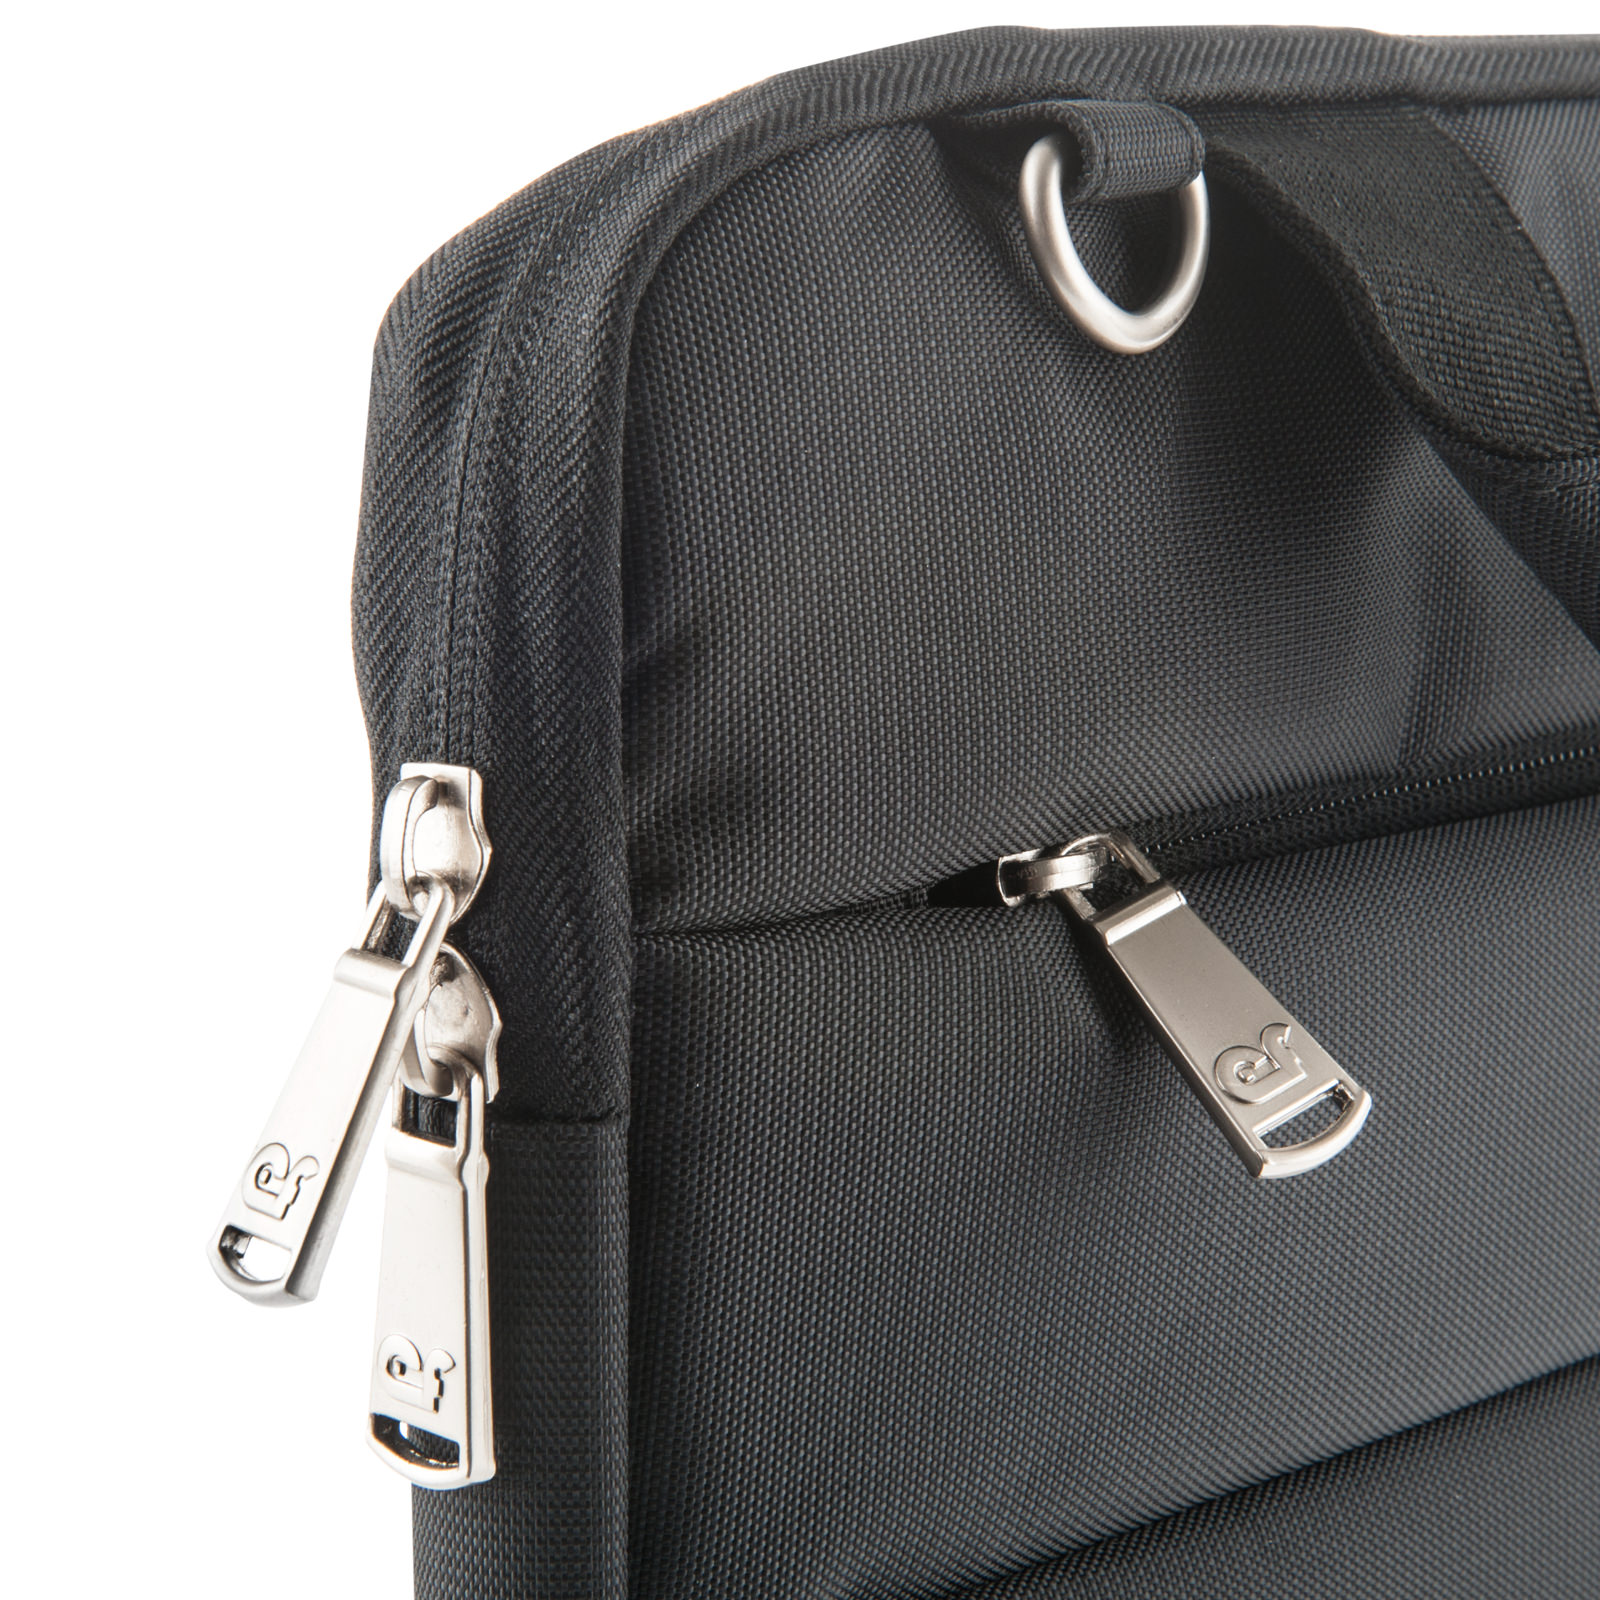 Caseflex 200D 13.3'' Macbook Laptop Bag - Black